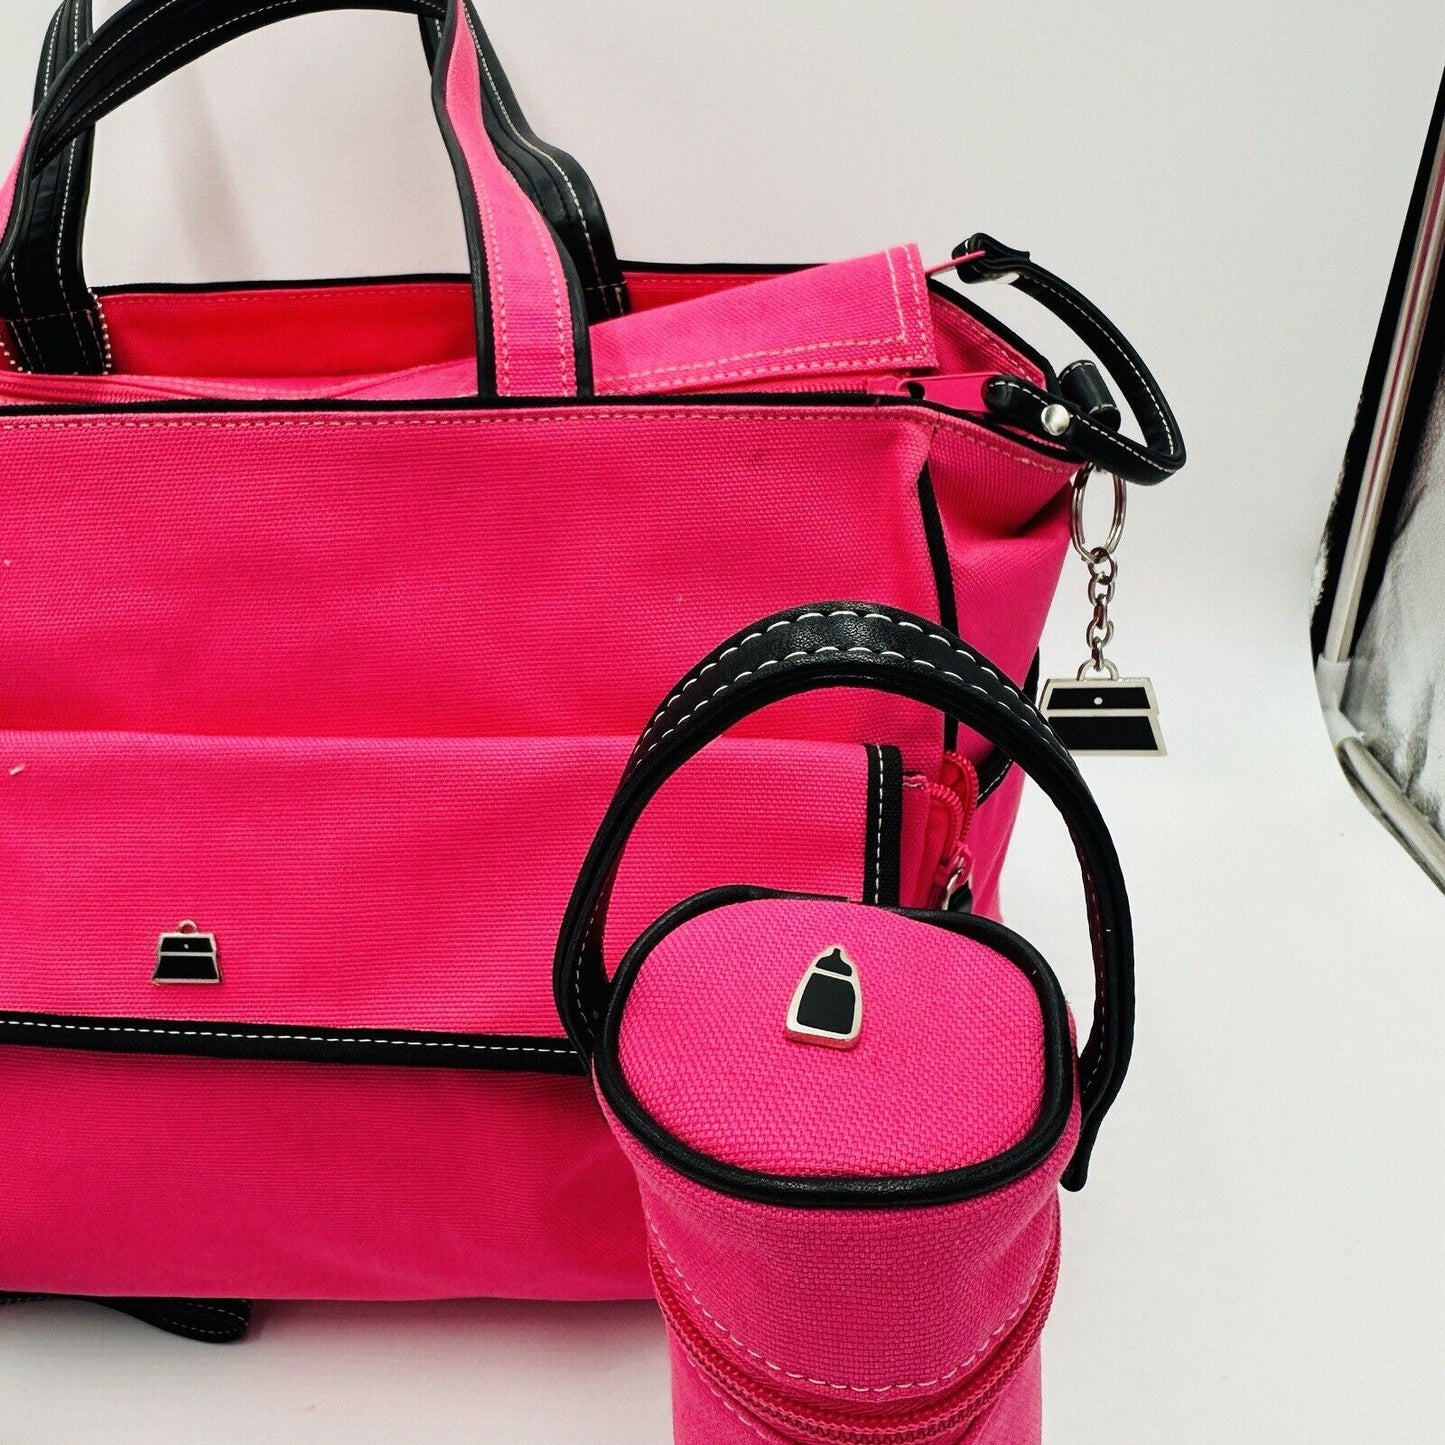 Kathy Van Zeeland Women's Tote Bag Purse Pink Large plus Accessories Handbag